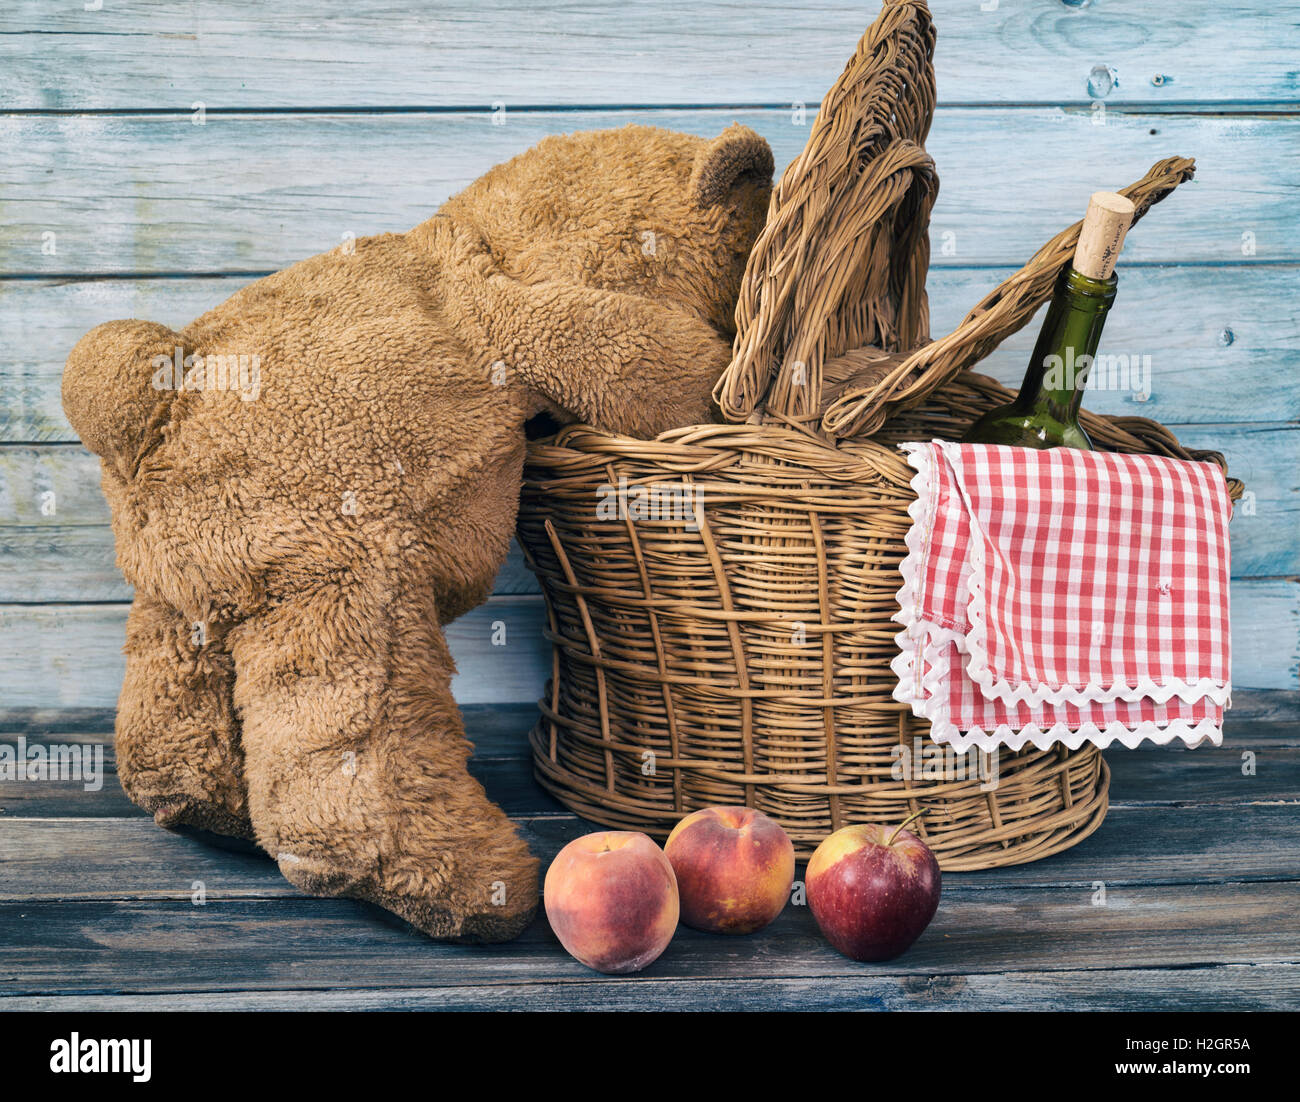 teddy bear snooping inside a picnic basket Stock Photo